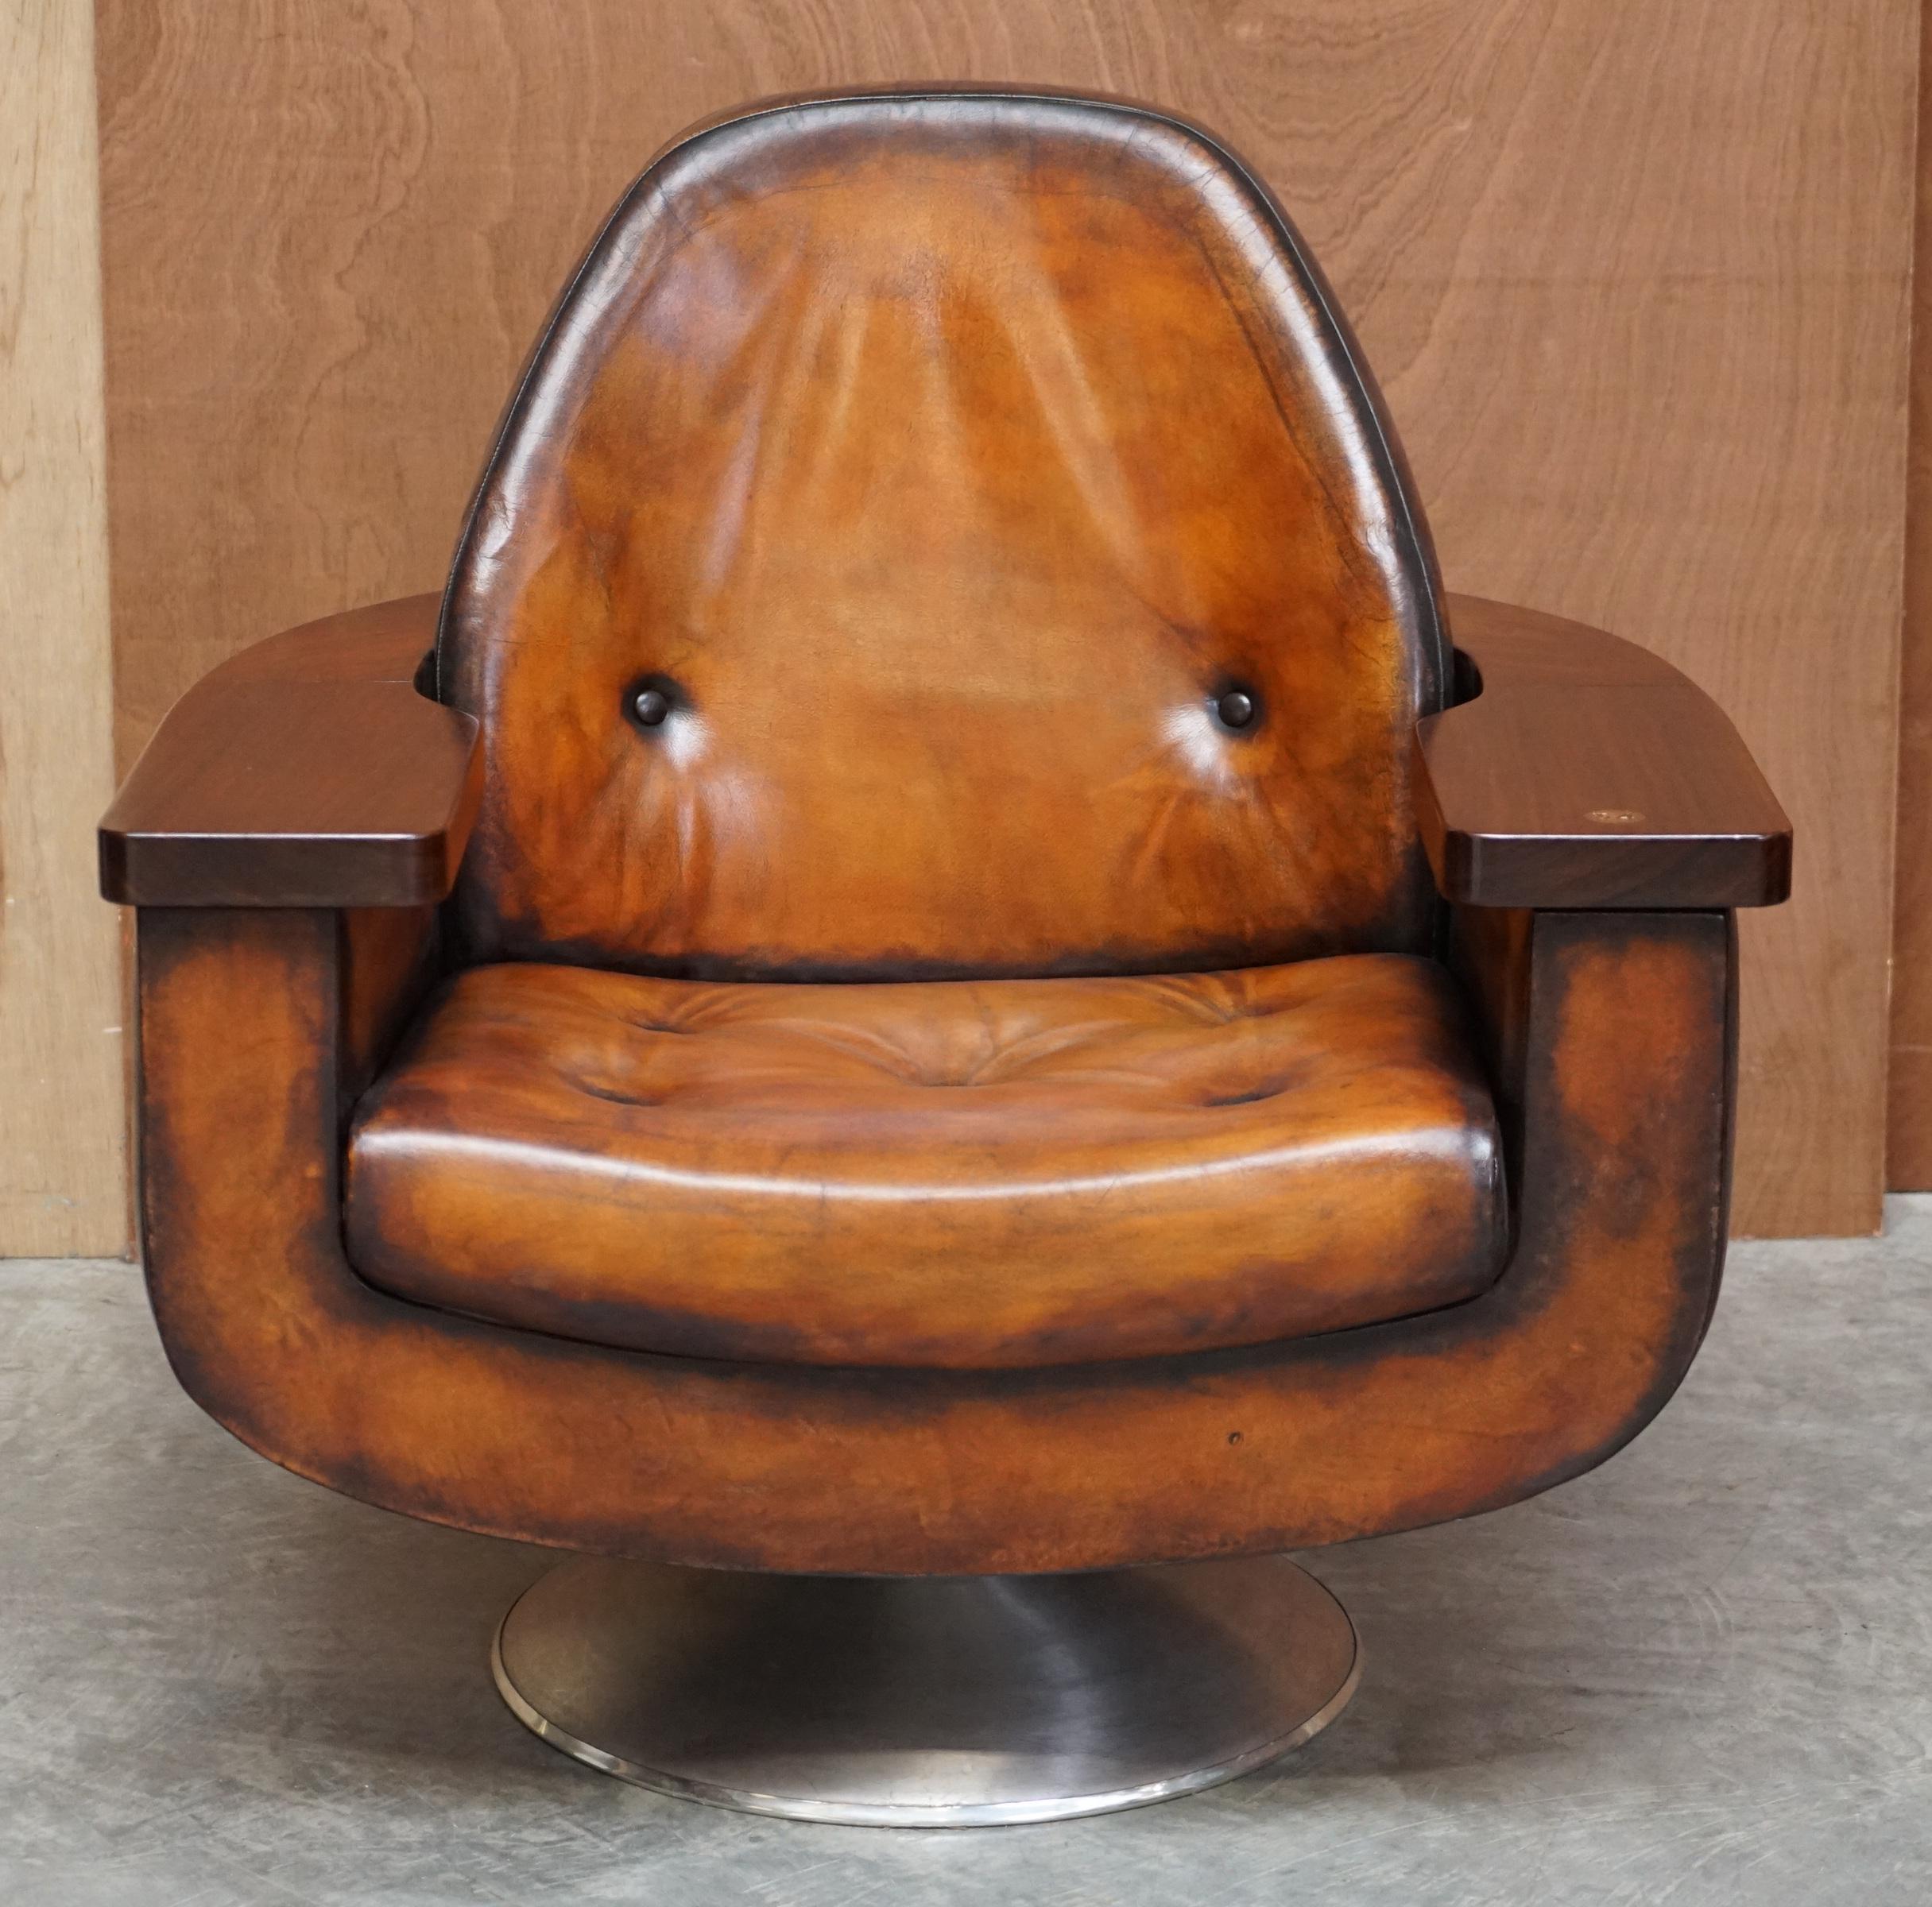 peter hoyte sling chair